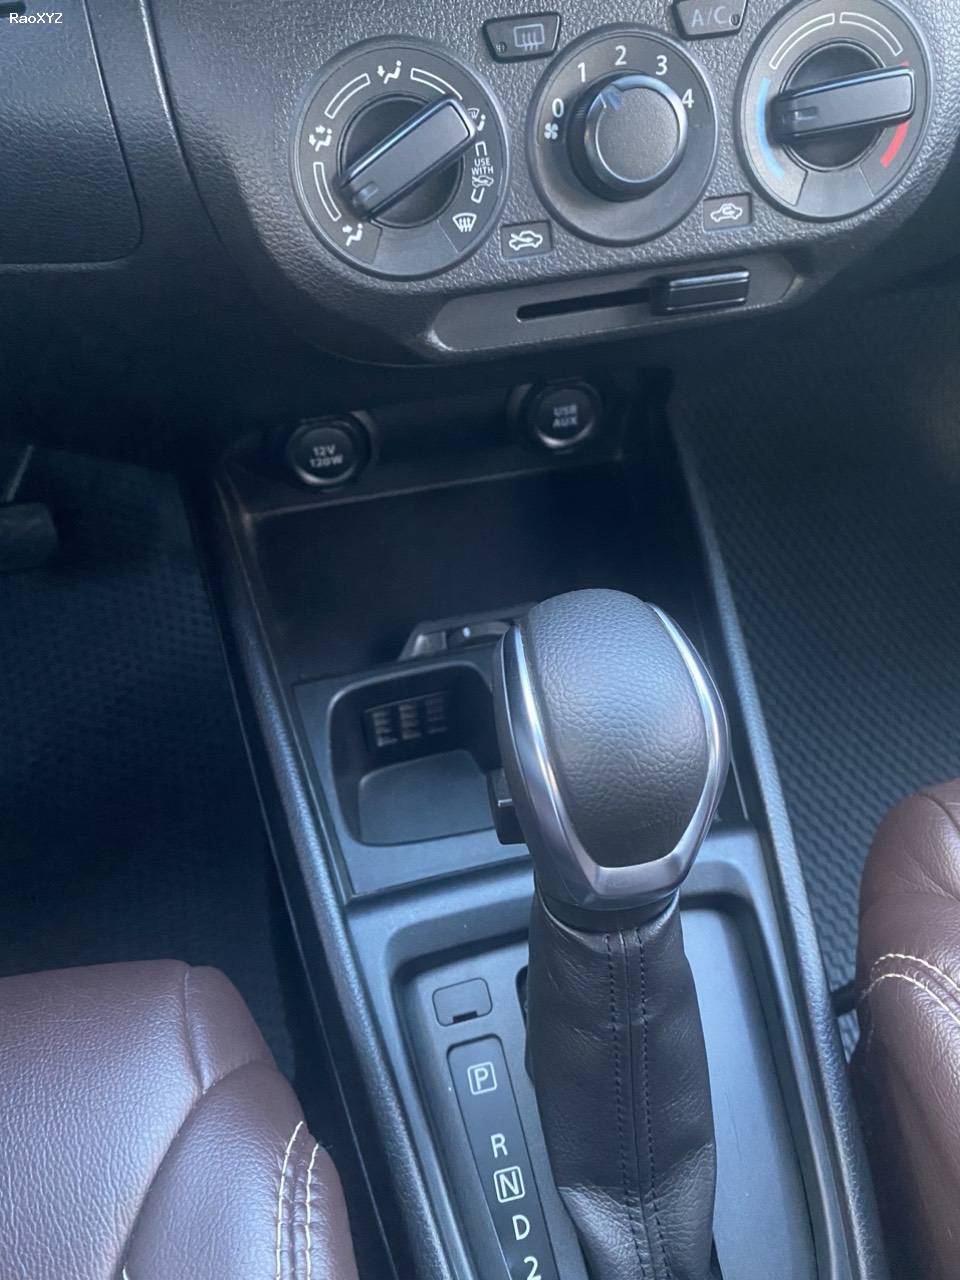 Chính chủ bán xe 7 chỗ Suzuki Ertiga GLX 1.5 AT 2019